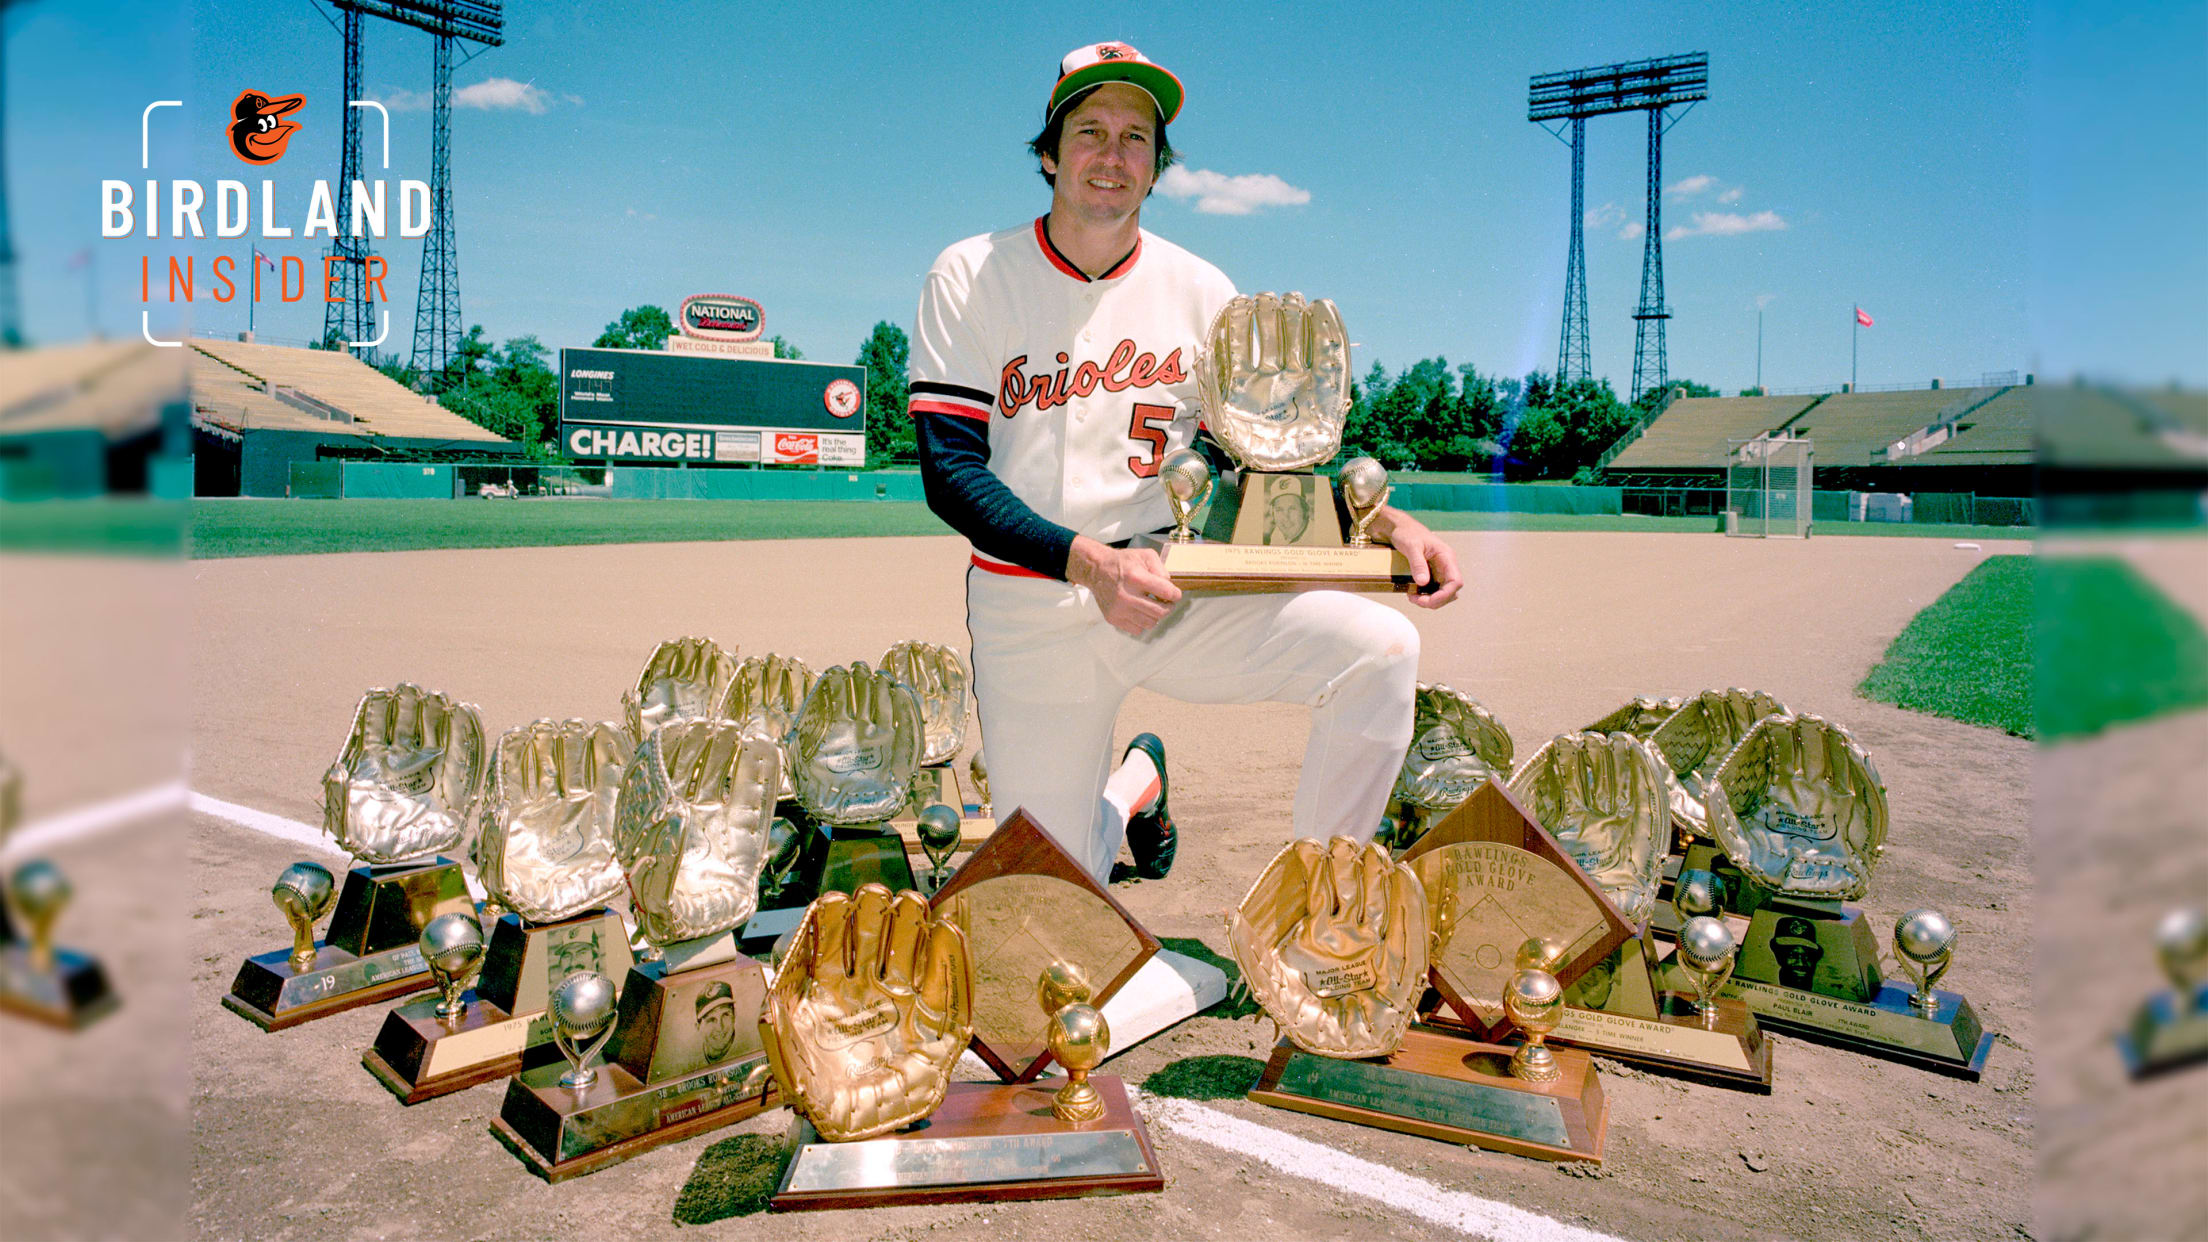 Dave McNally belongs in MLB Hall of Fame